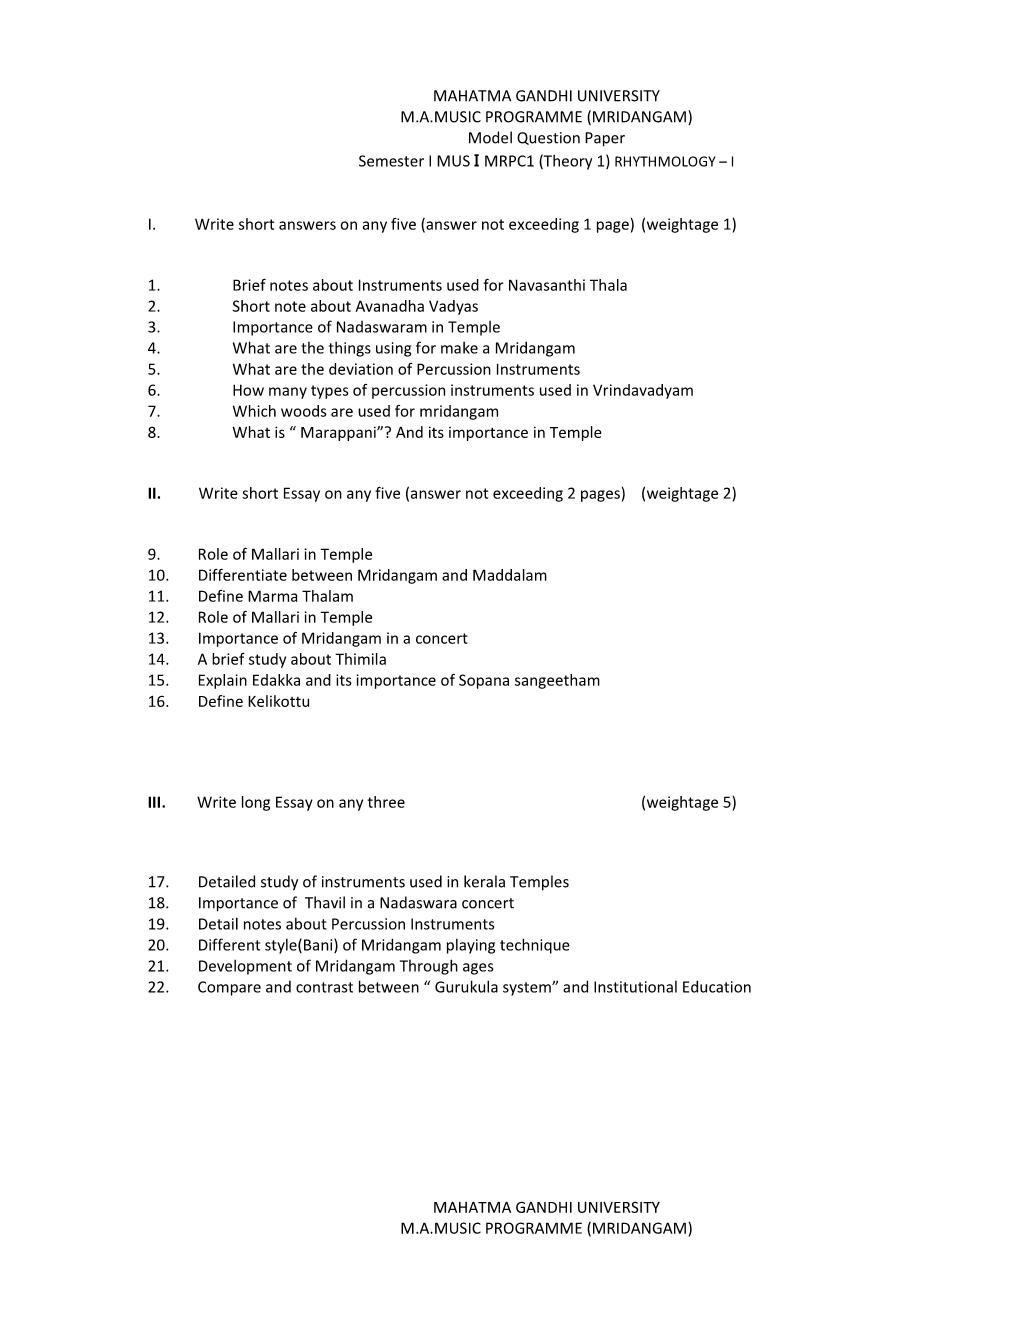 MRIDANGAM) Model Question Paper Semester I MUS I MRPC1 (Theory 1) RHYTHMOLOGY – I